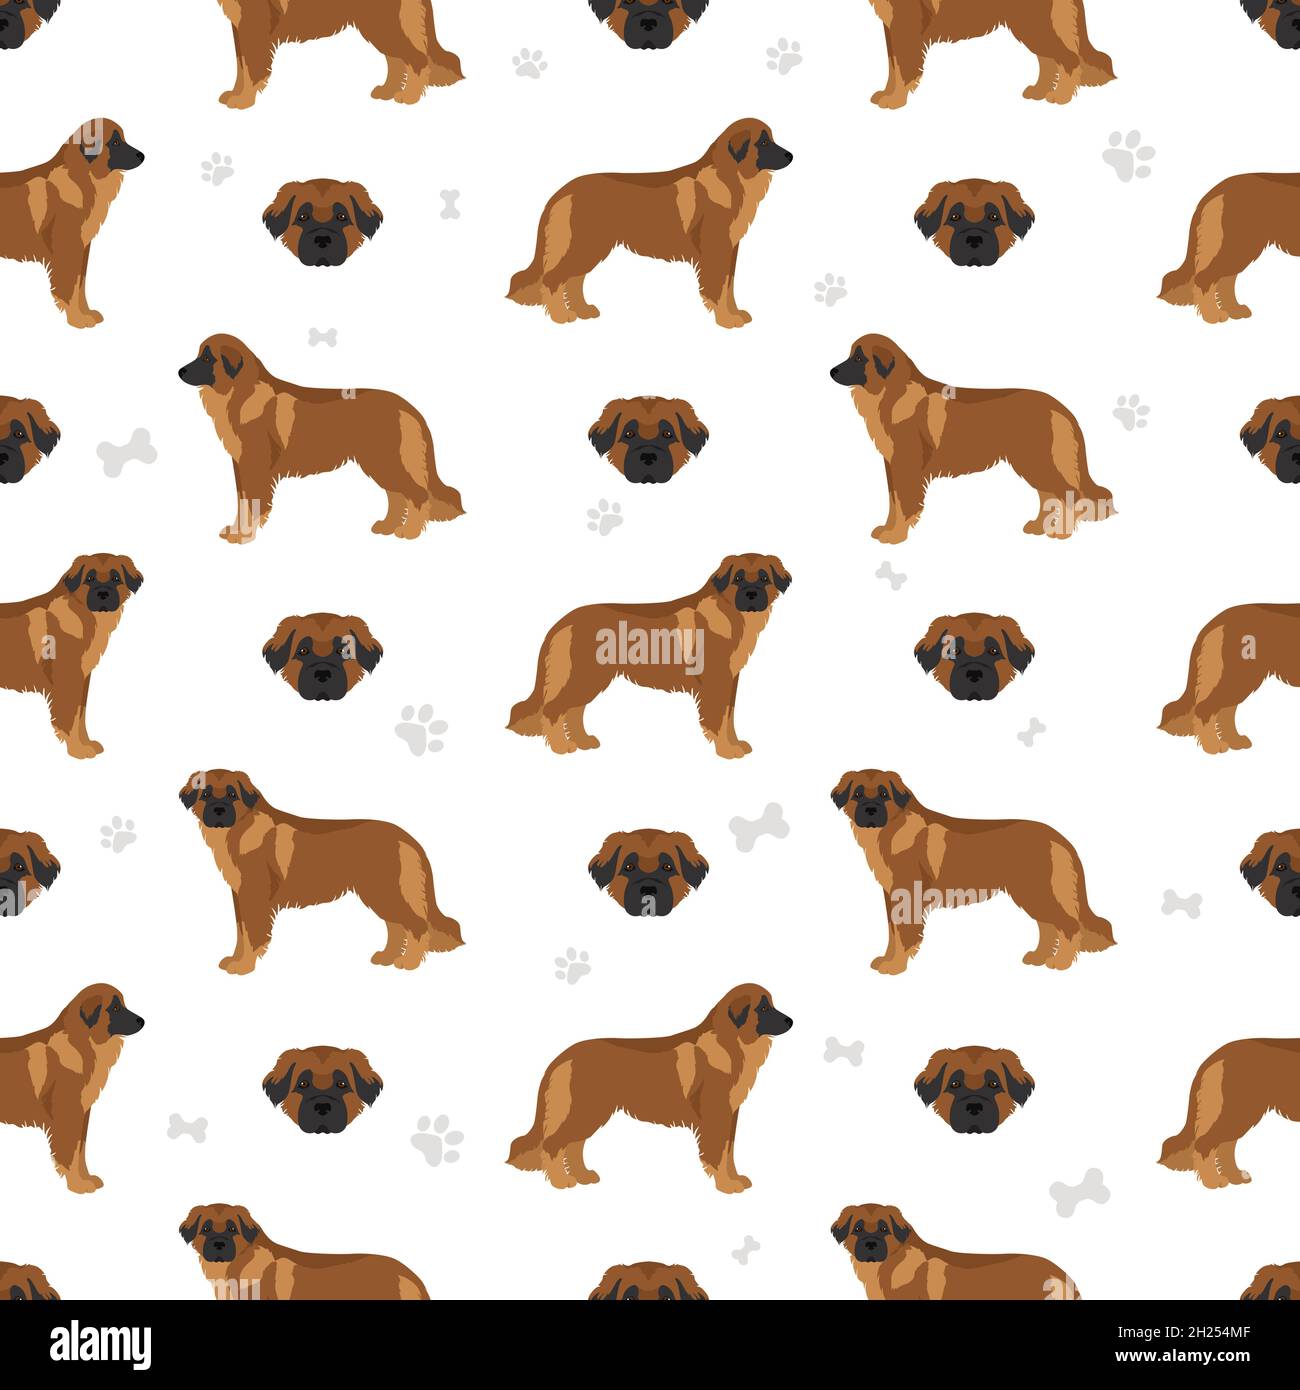 Estrela mountain dog seamless pattern. Different poses, coat colors set.  Vector illustration Stock Vector